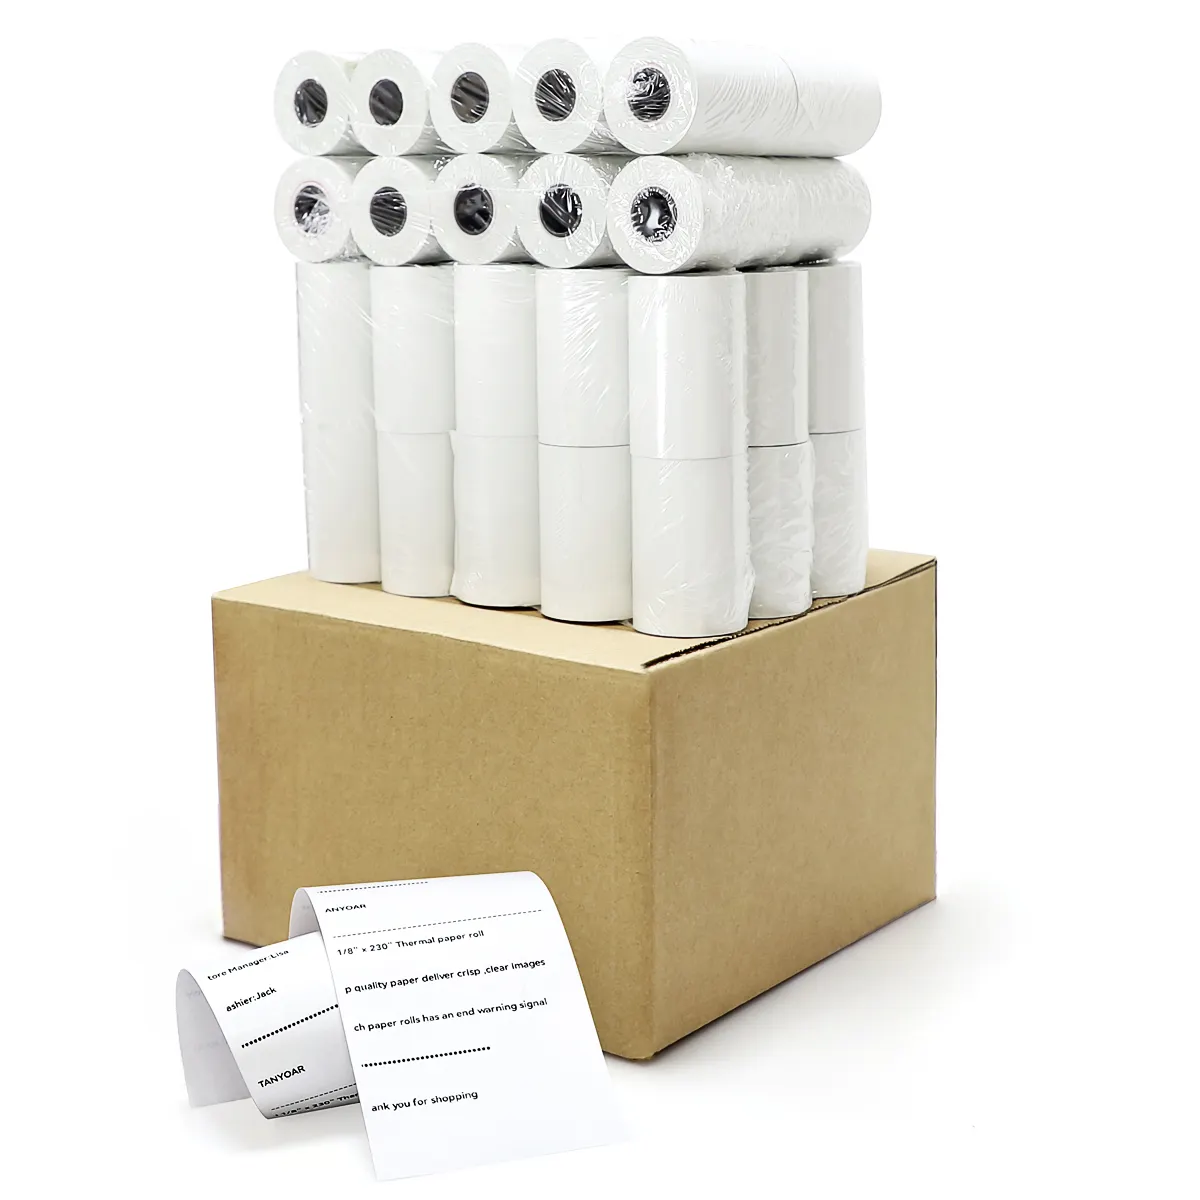 YSGK professional manufacture till roll pos paper a grade 57 50 thermal paper rolls cash register paper